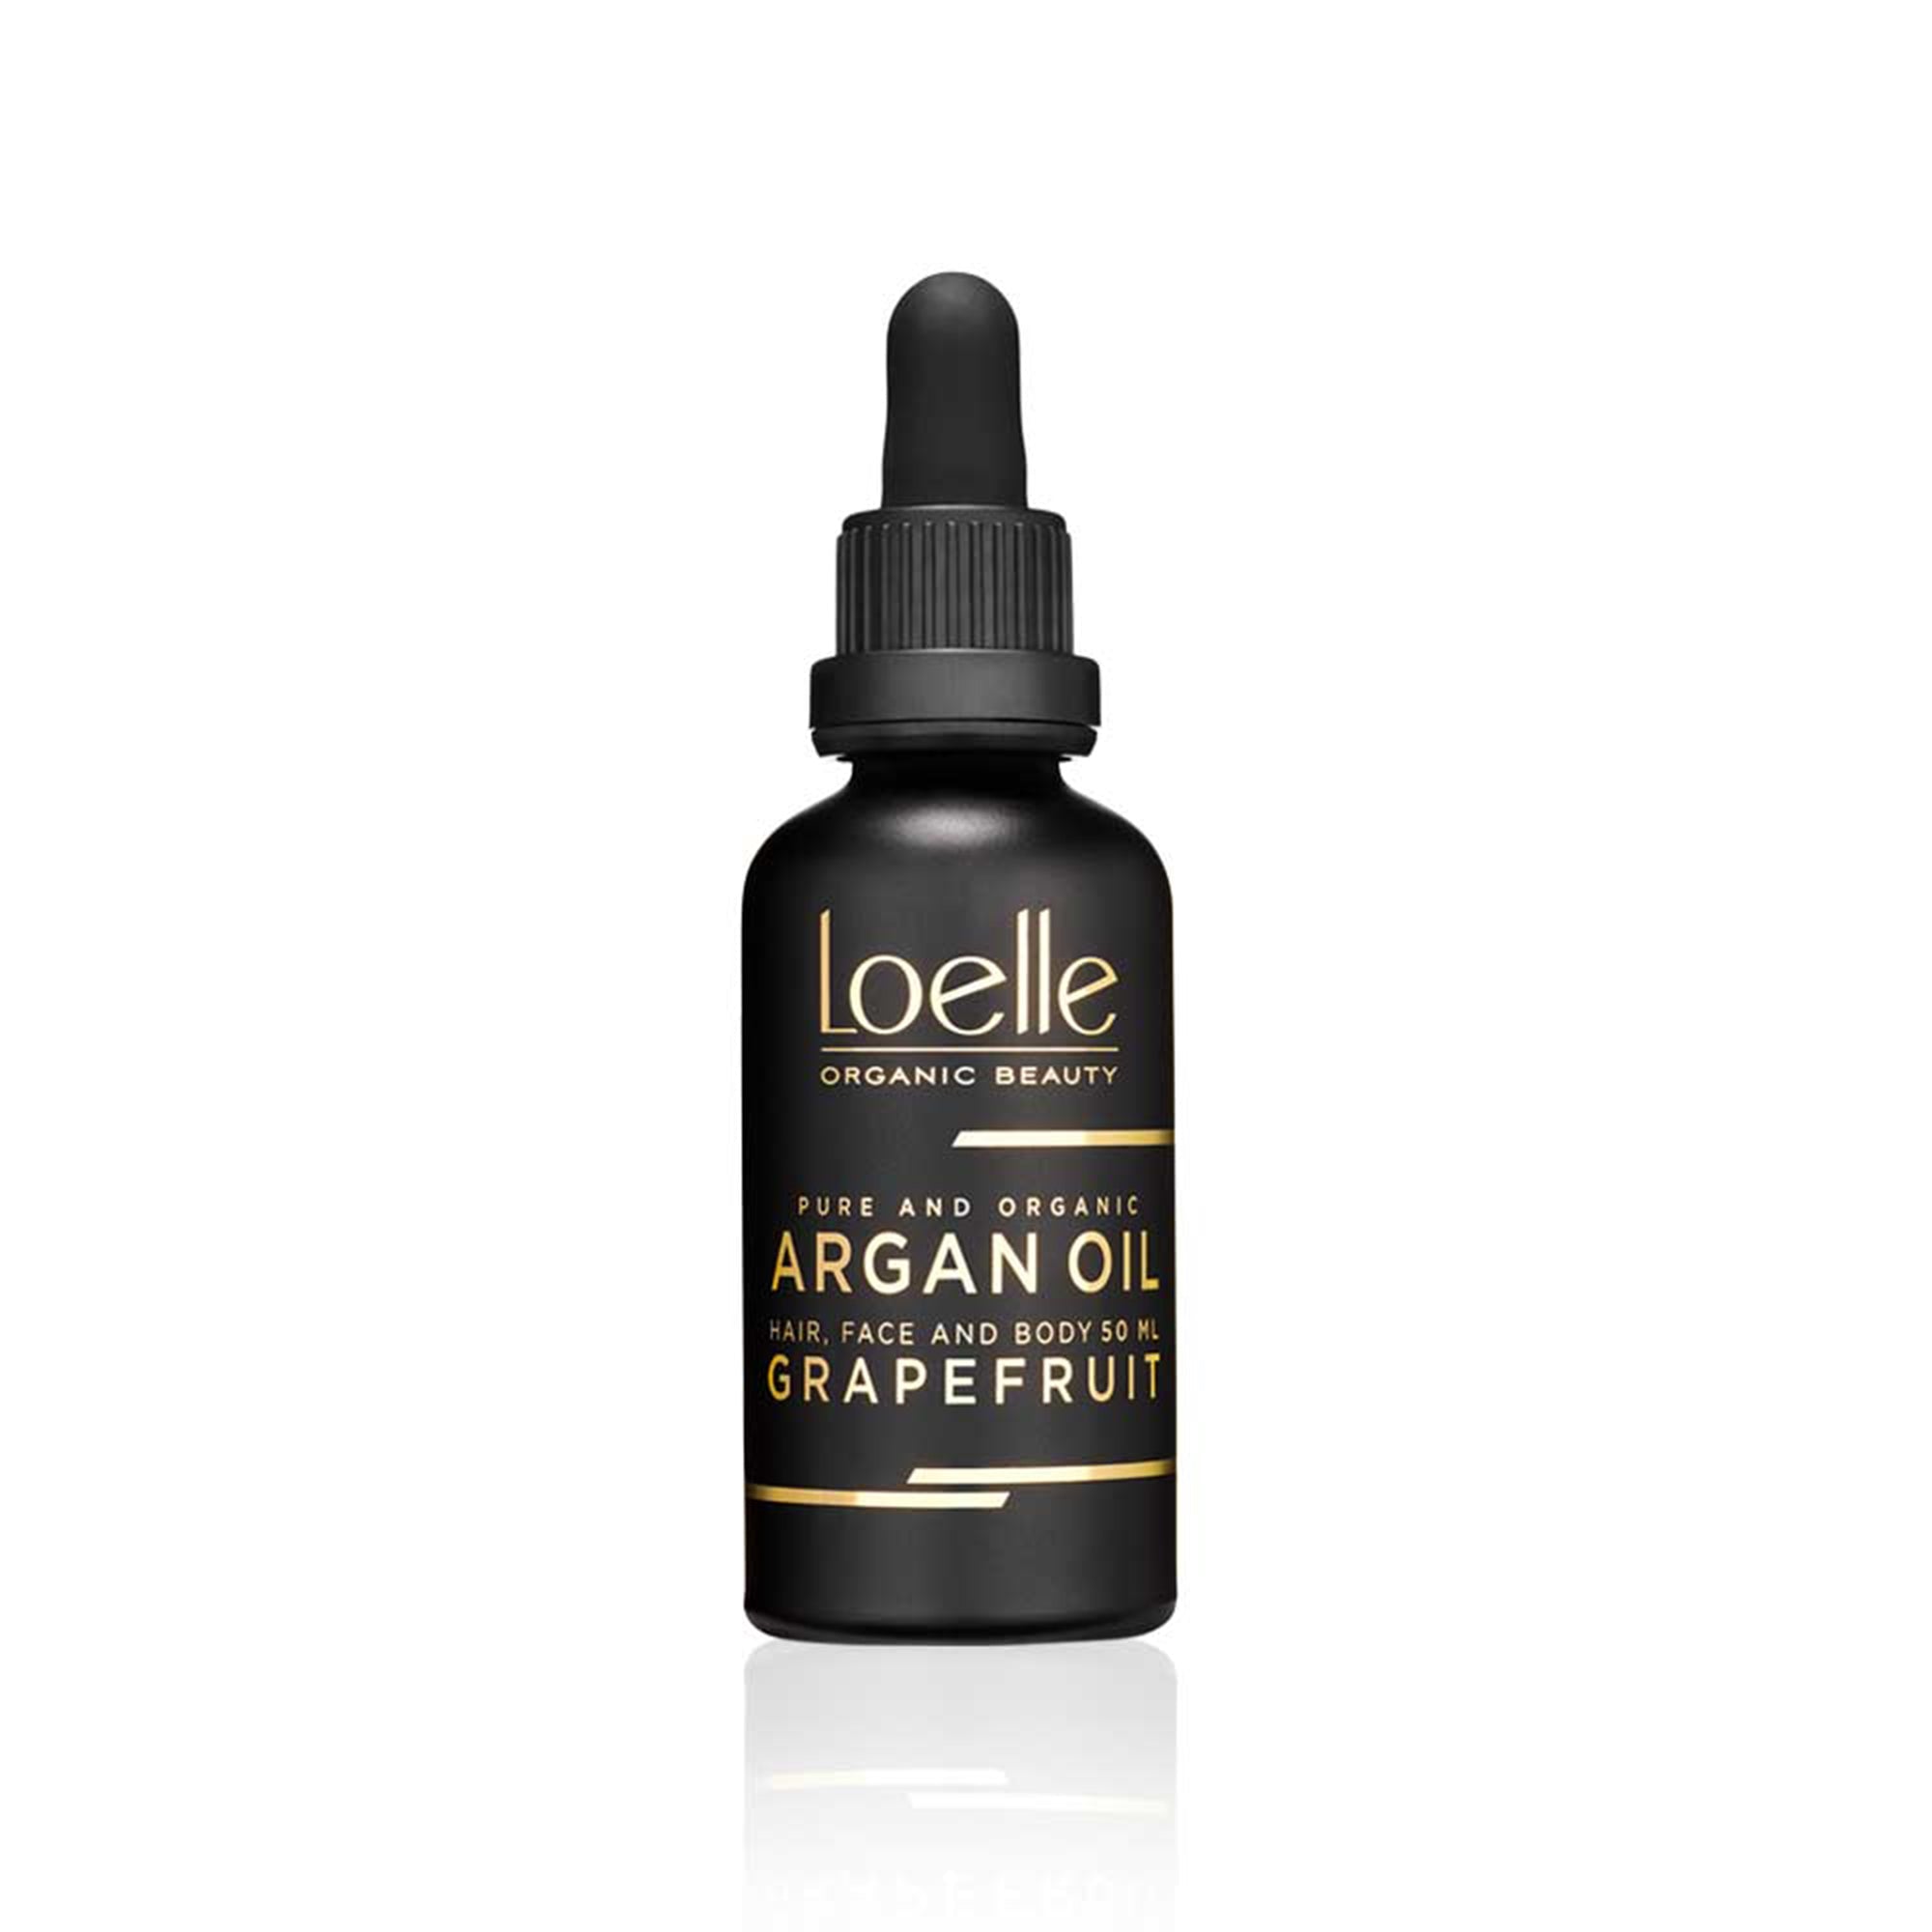 Argan Oil with Grapefruit Extract - 50ml